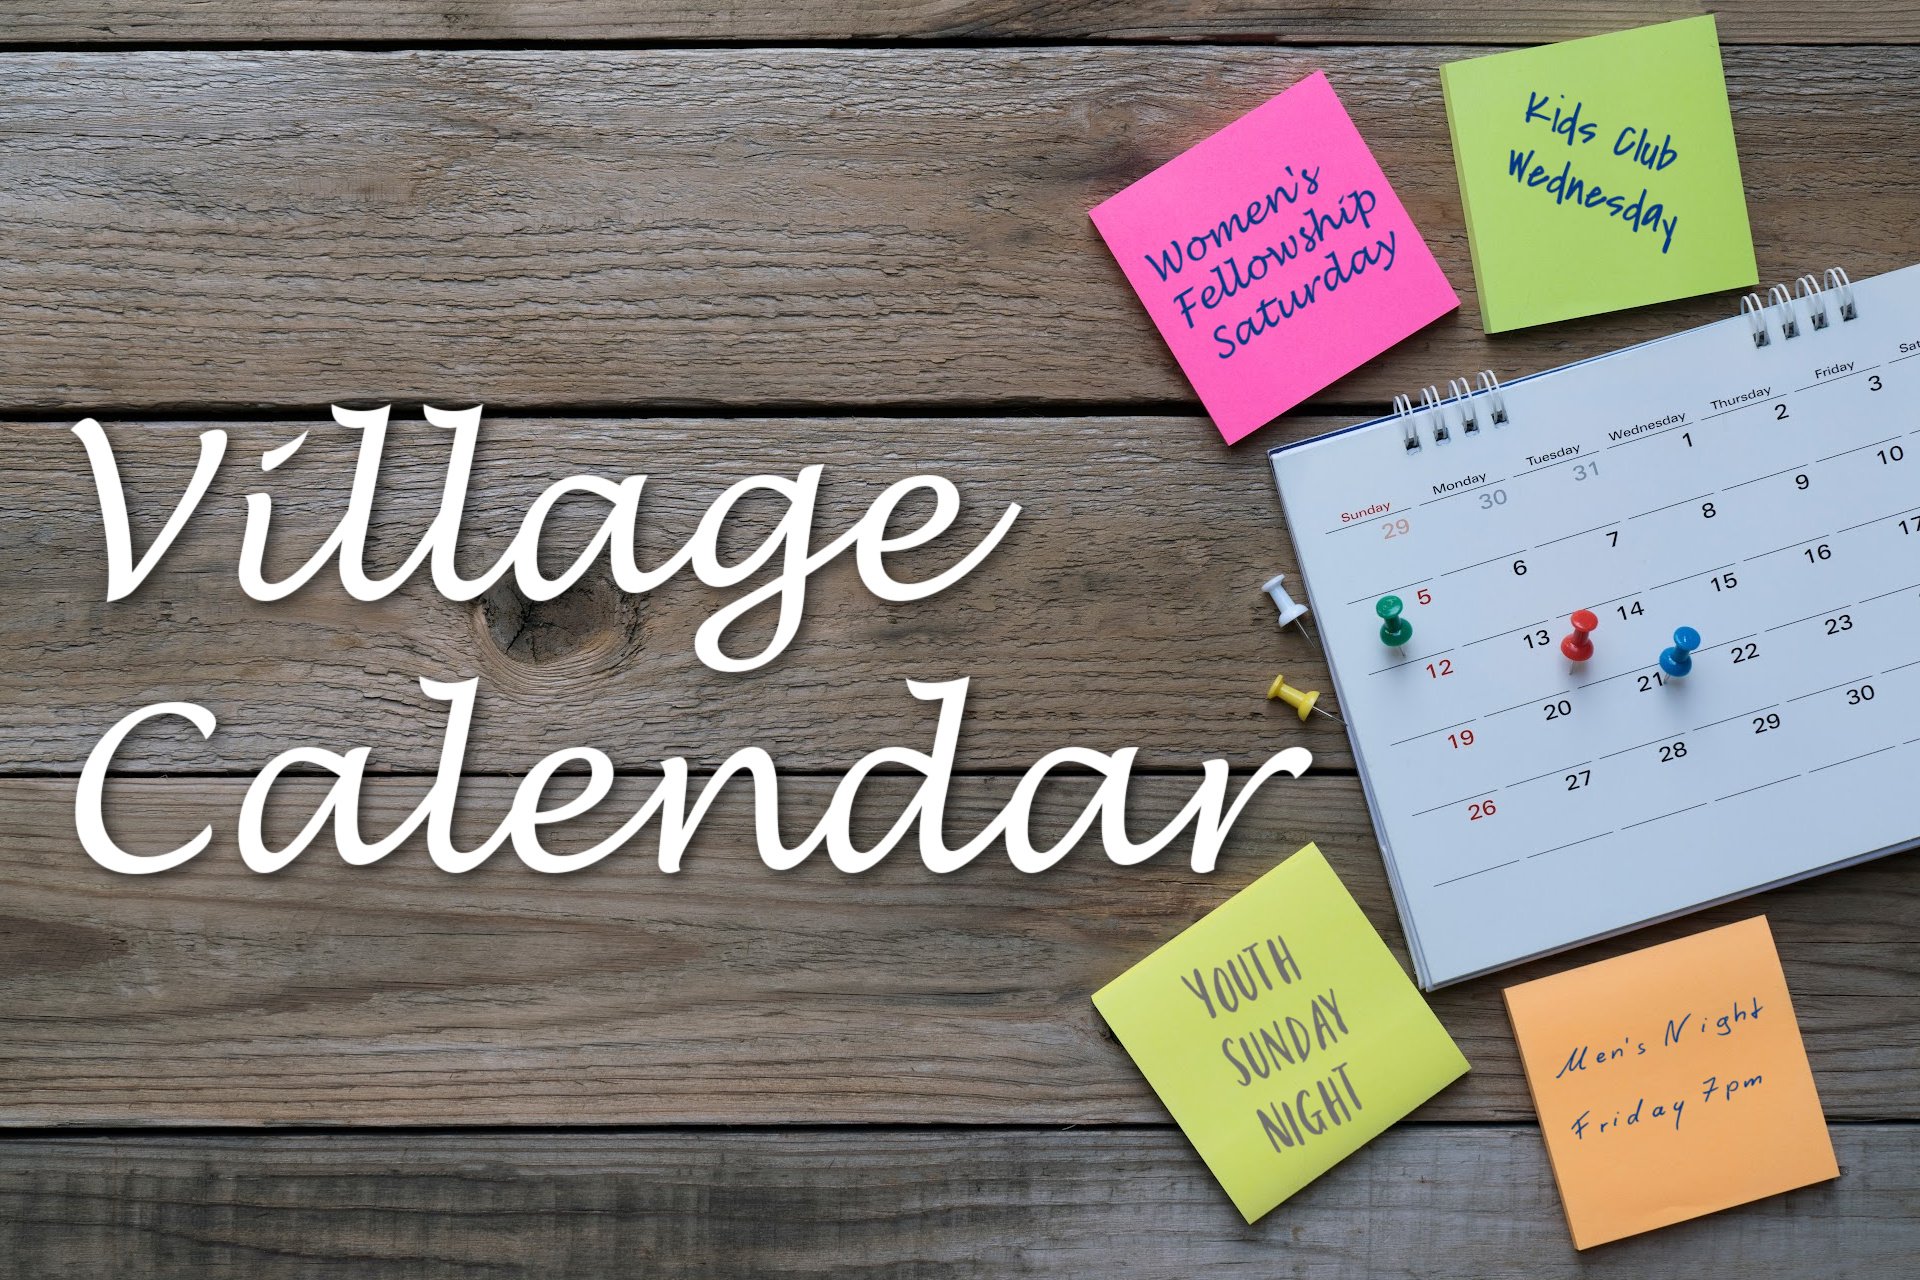 Village Calendar.jpg